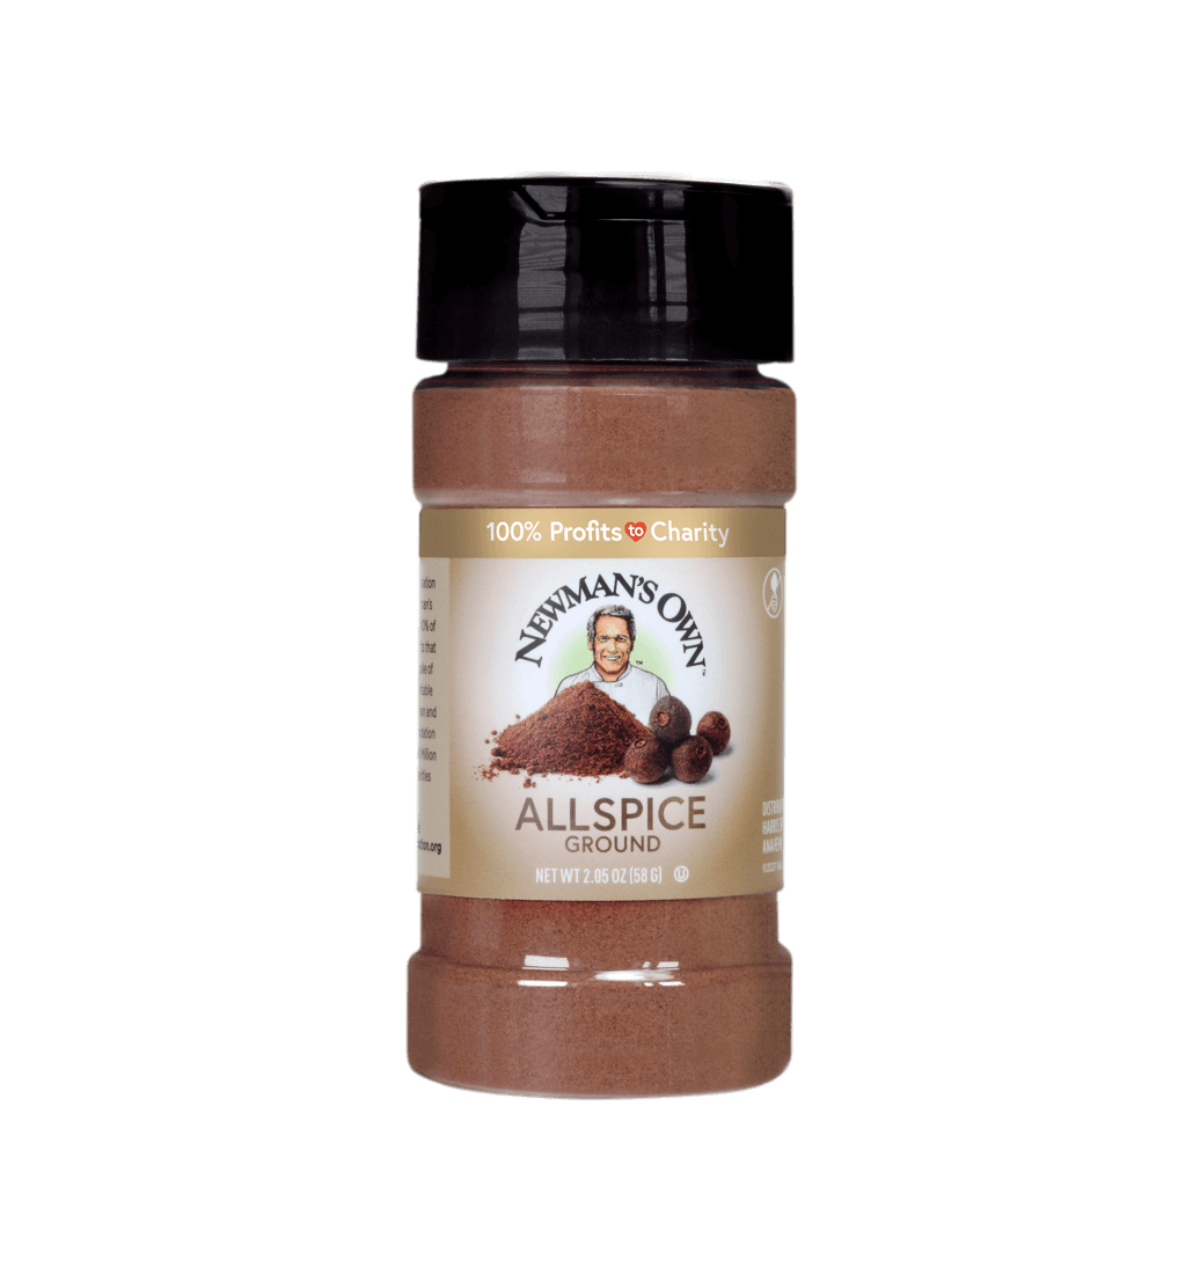 Allspice - Ground  Maceo Spice & Import Co.